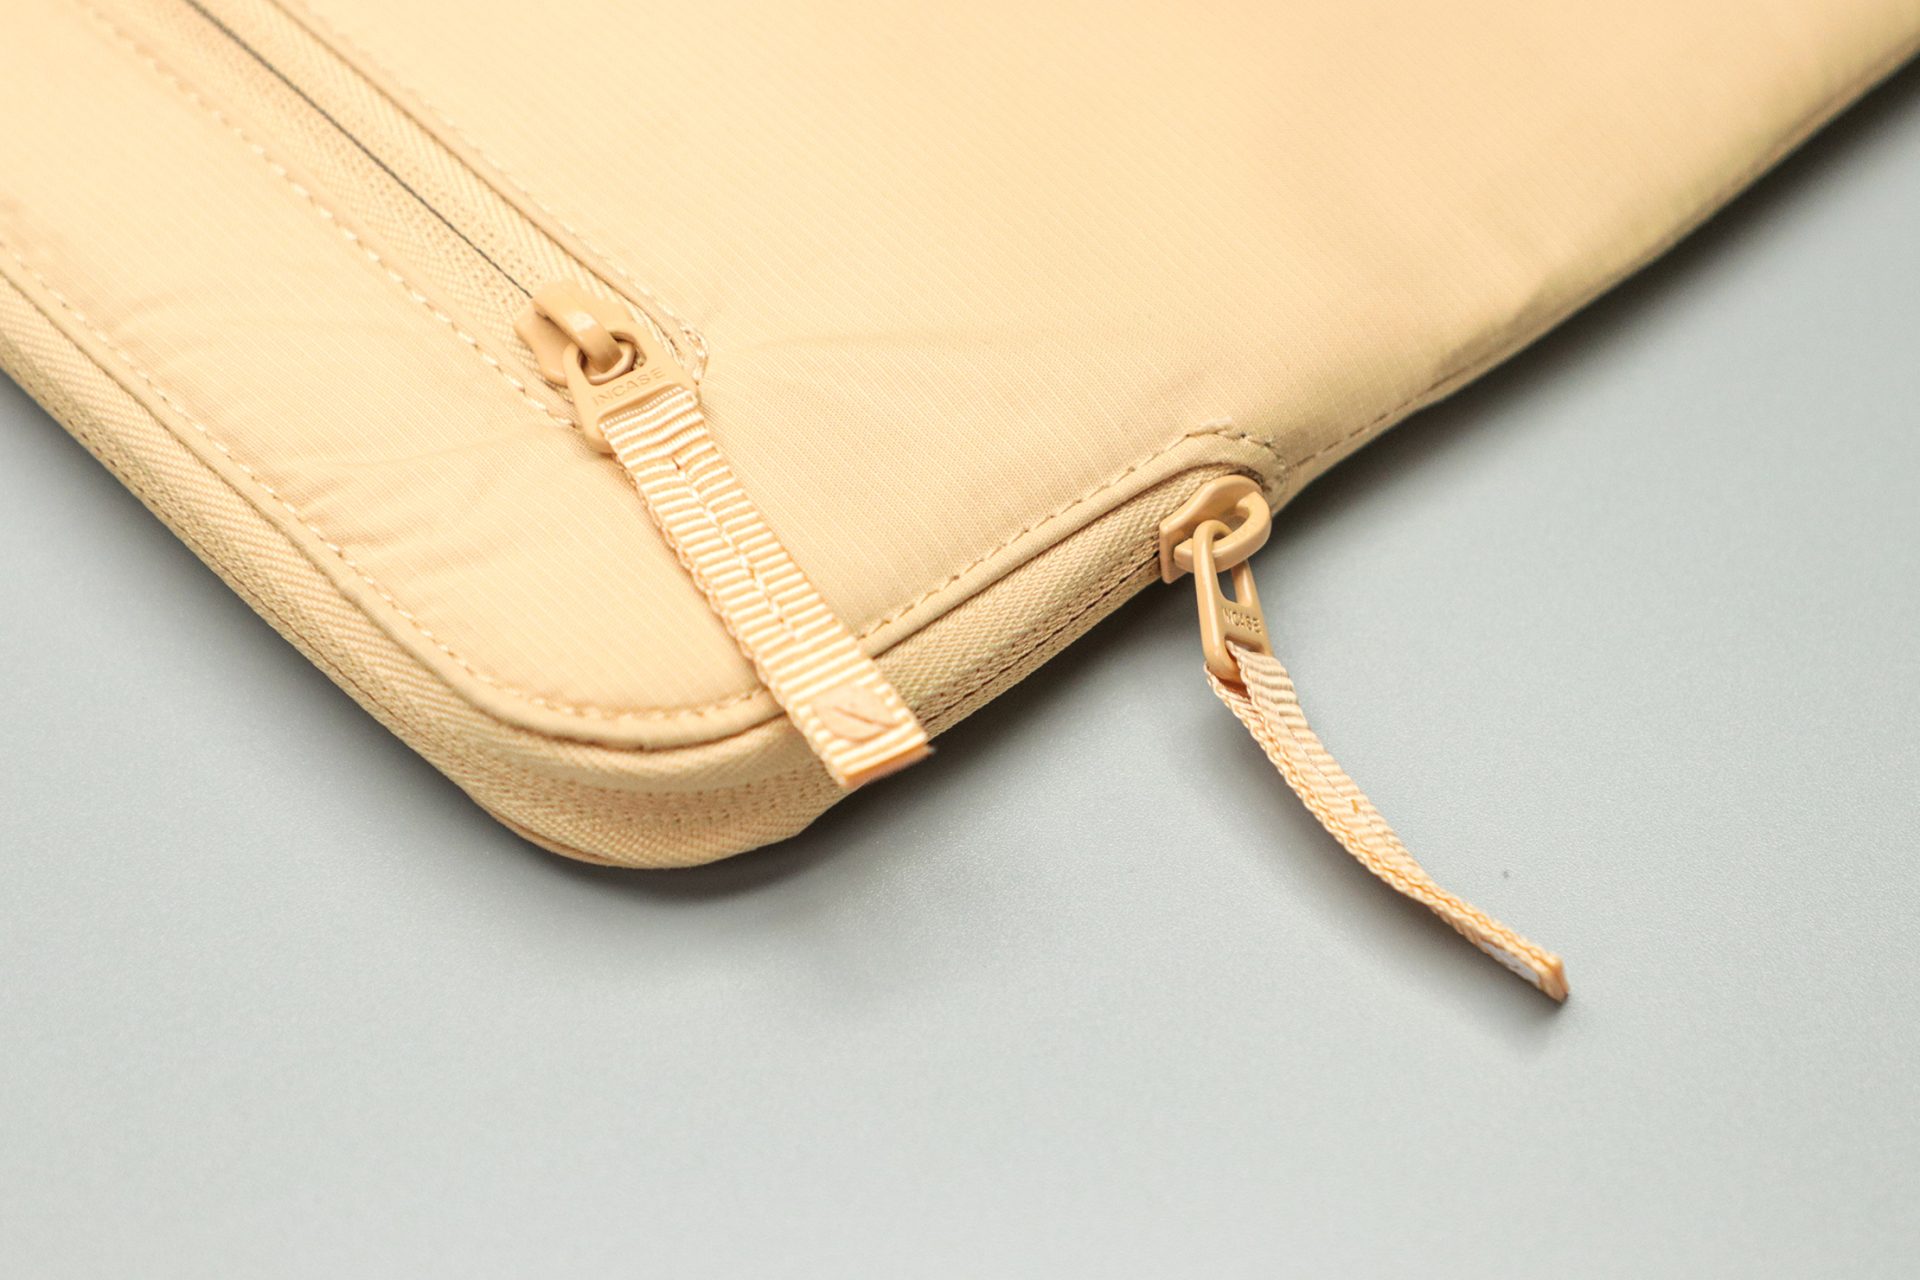 Incase Compact Sleeve with BIONIC zippers